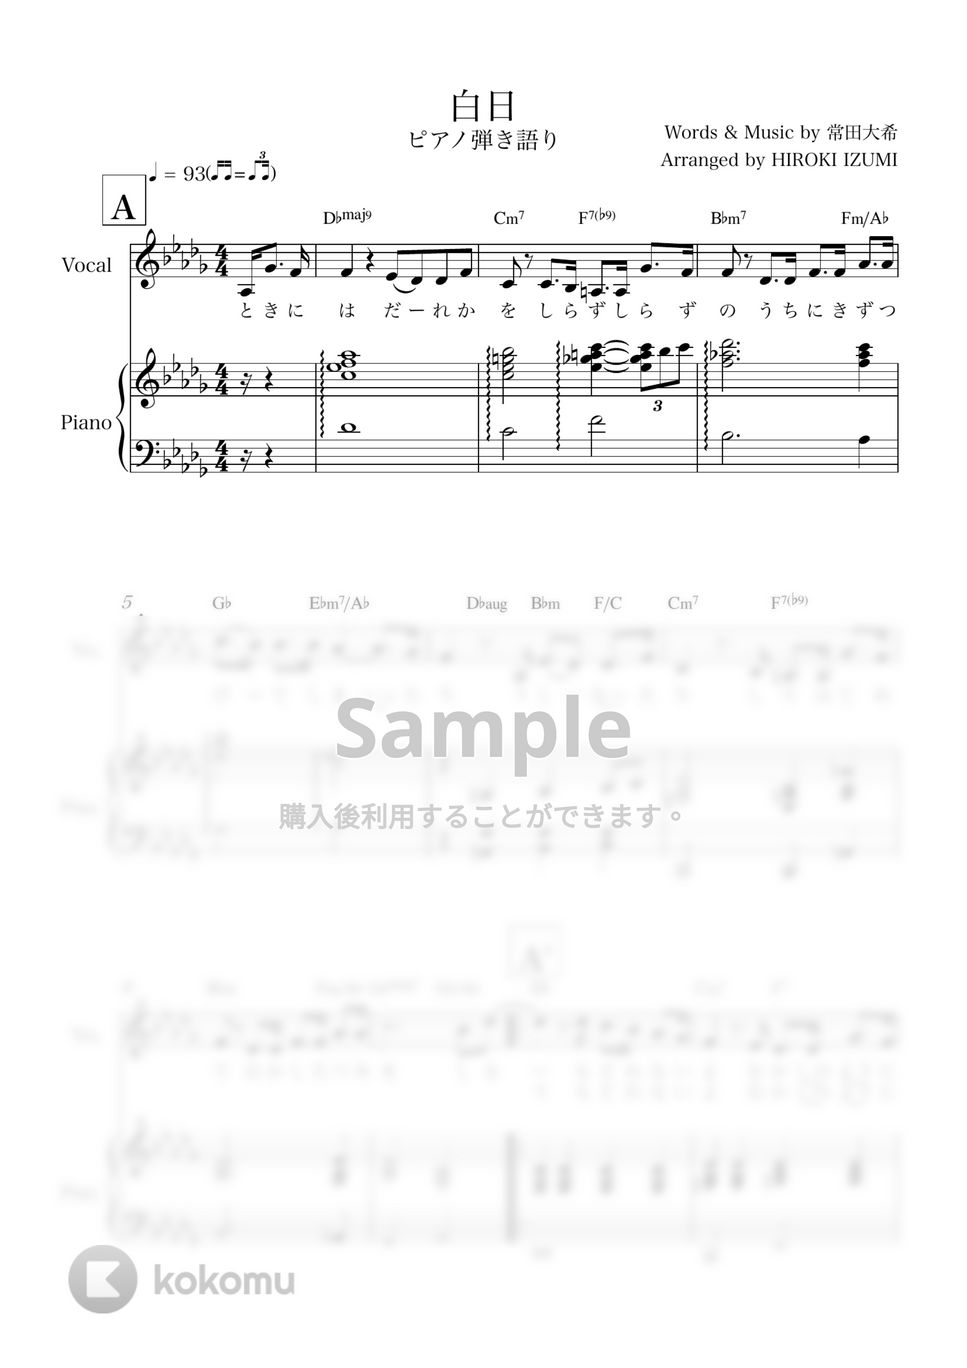 King Gnu - 白日 (ピアノ弾き語り) by 泉宏樹